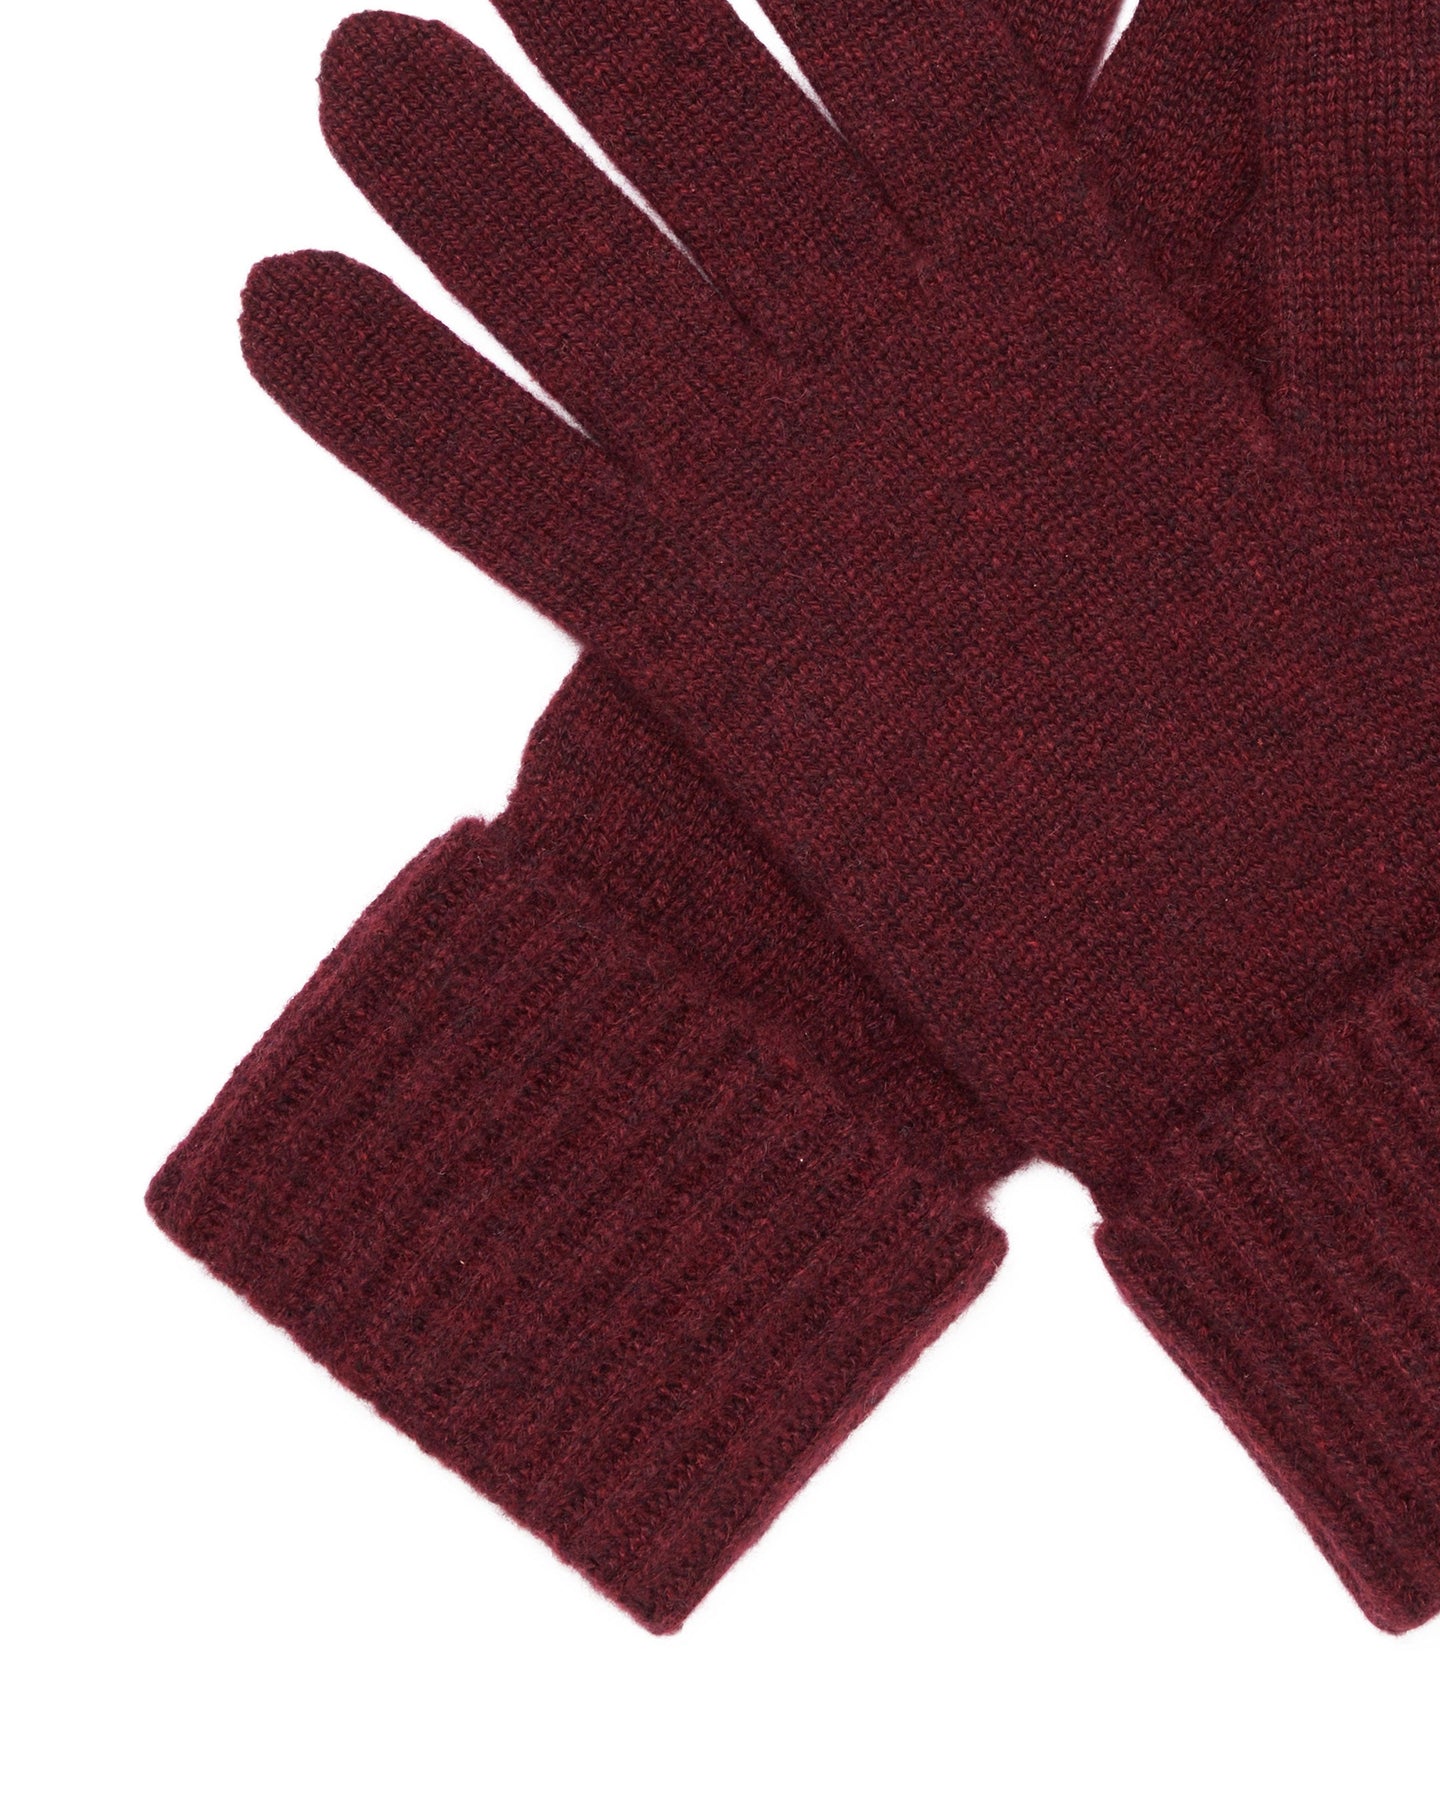 N.Peal Women's Ribbed Cashmere Gloves Shiraz Melange Red